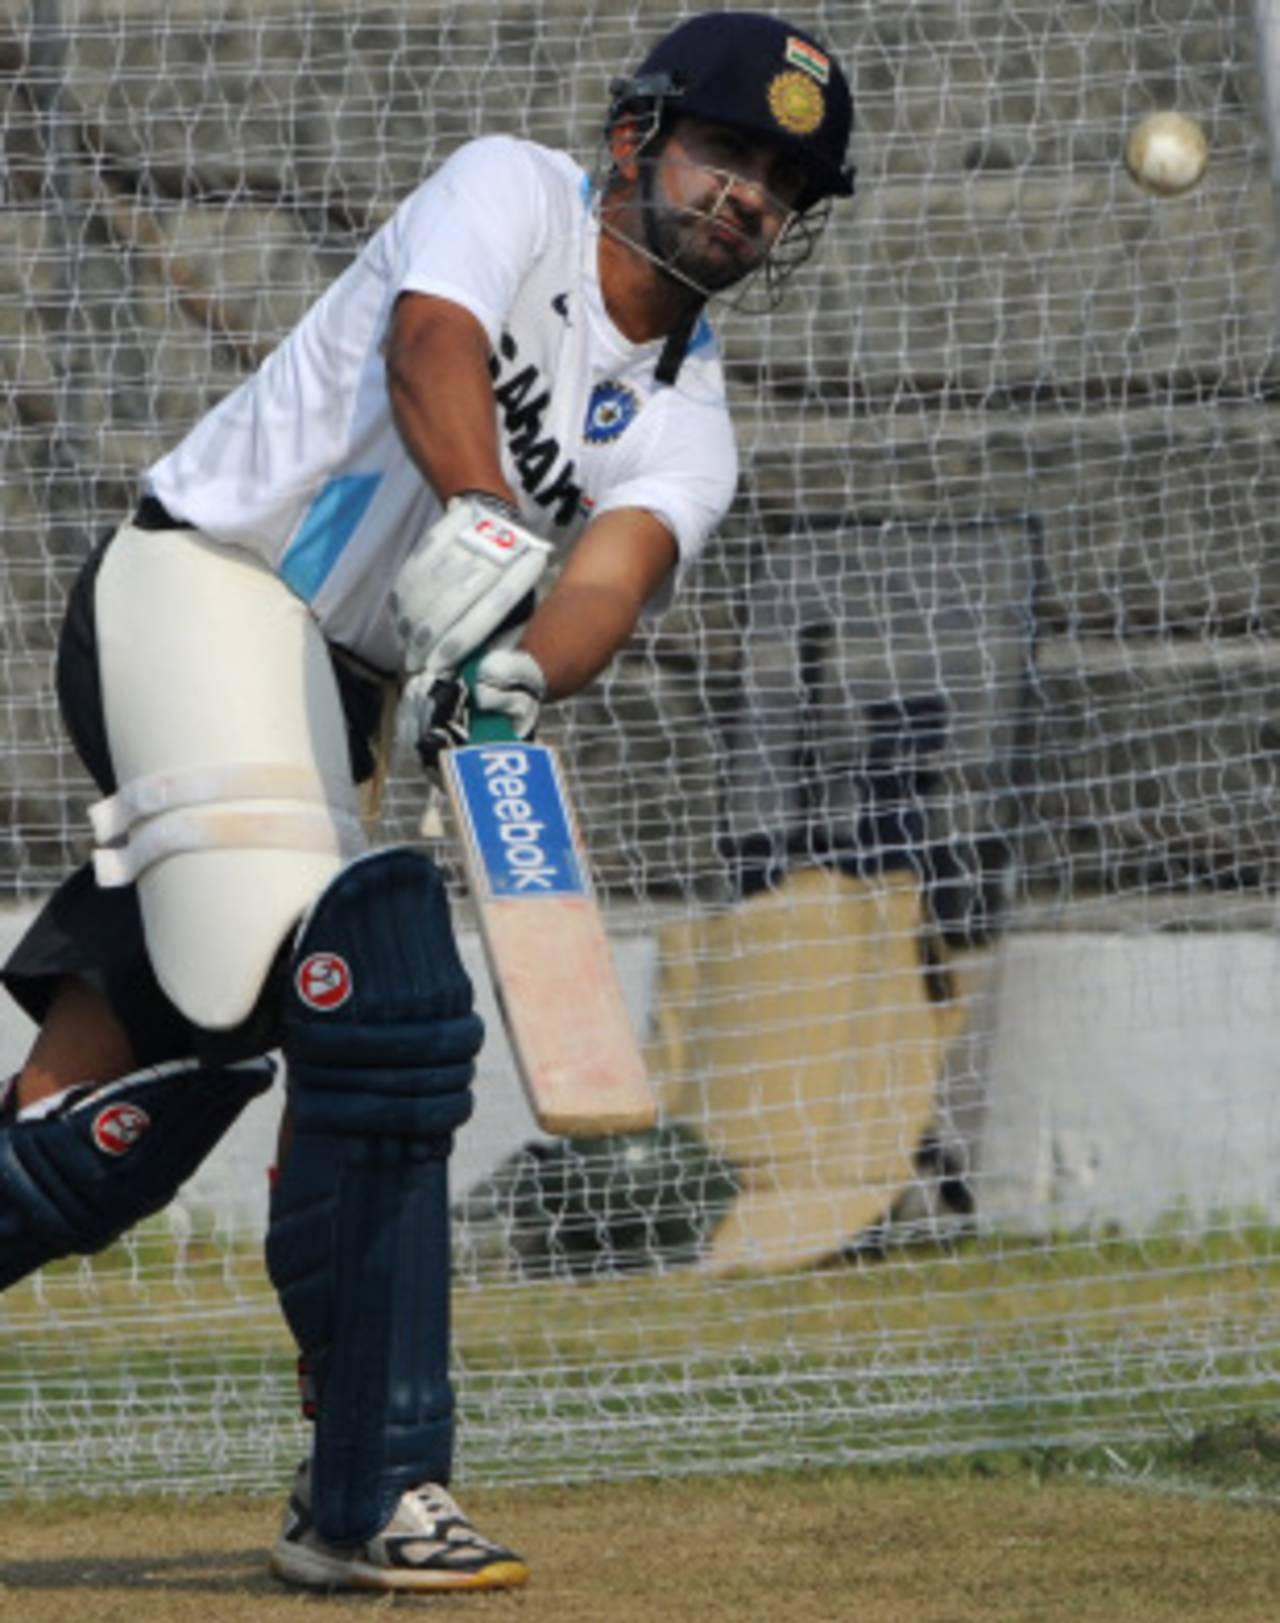 Gautam Gambhir bats in the nets the day before his first match as India captain, Guwahati, November 27, 2010